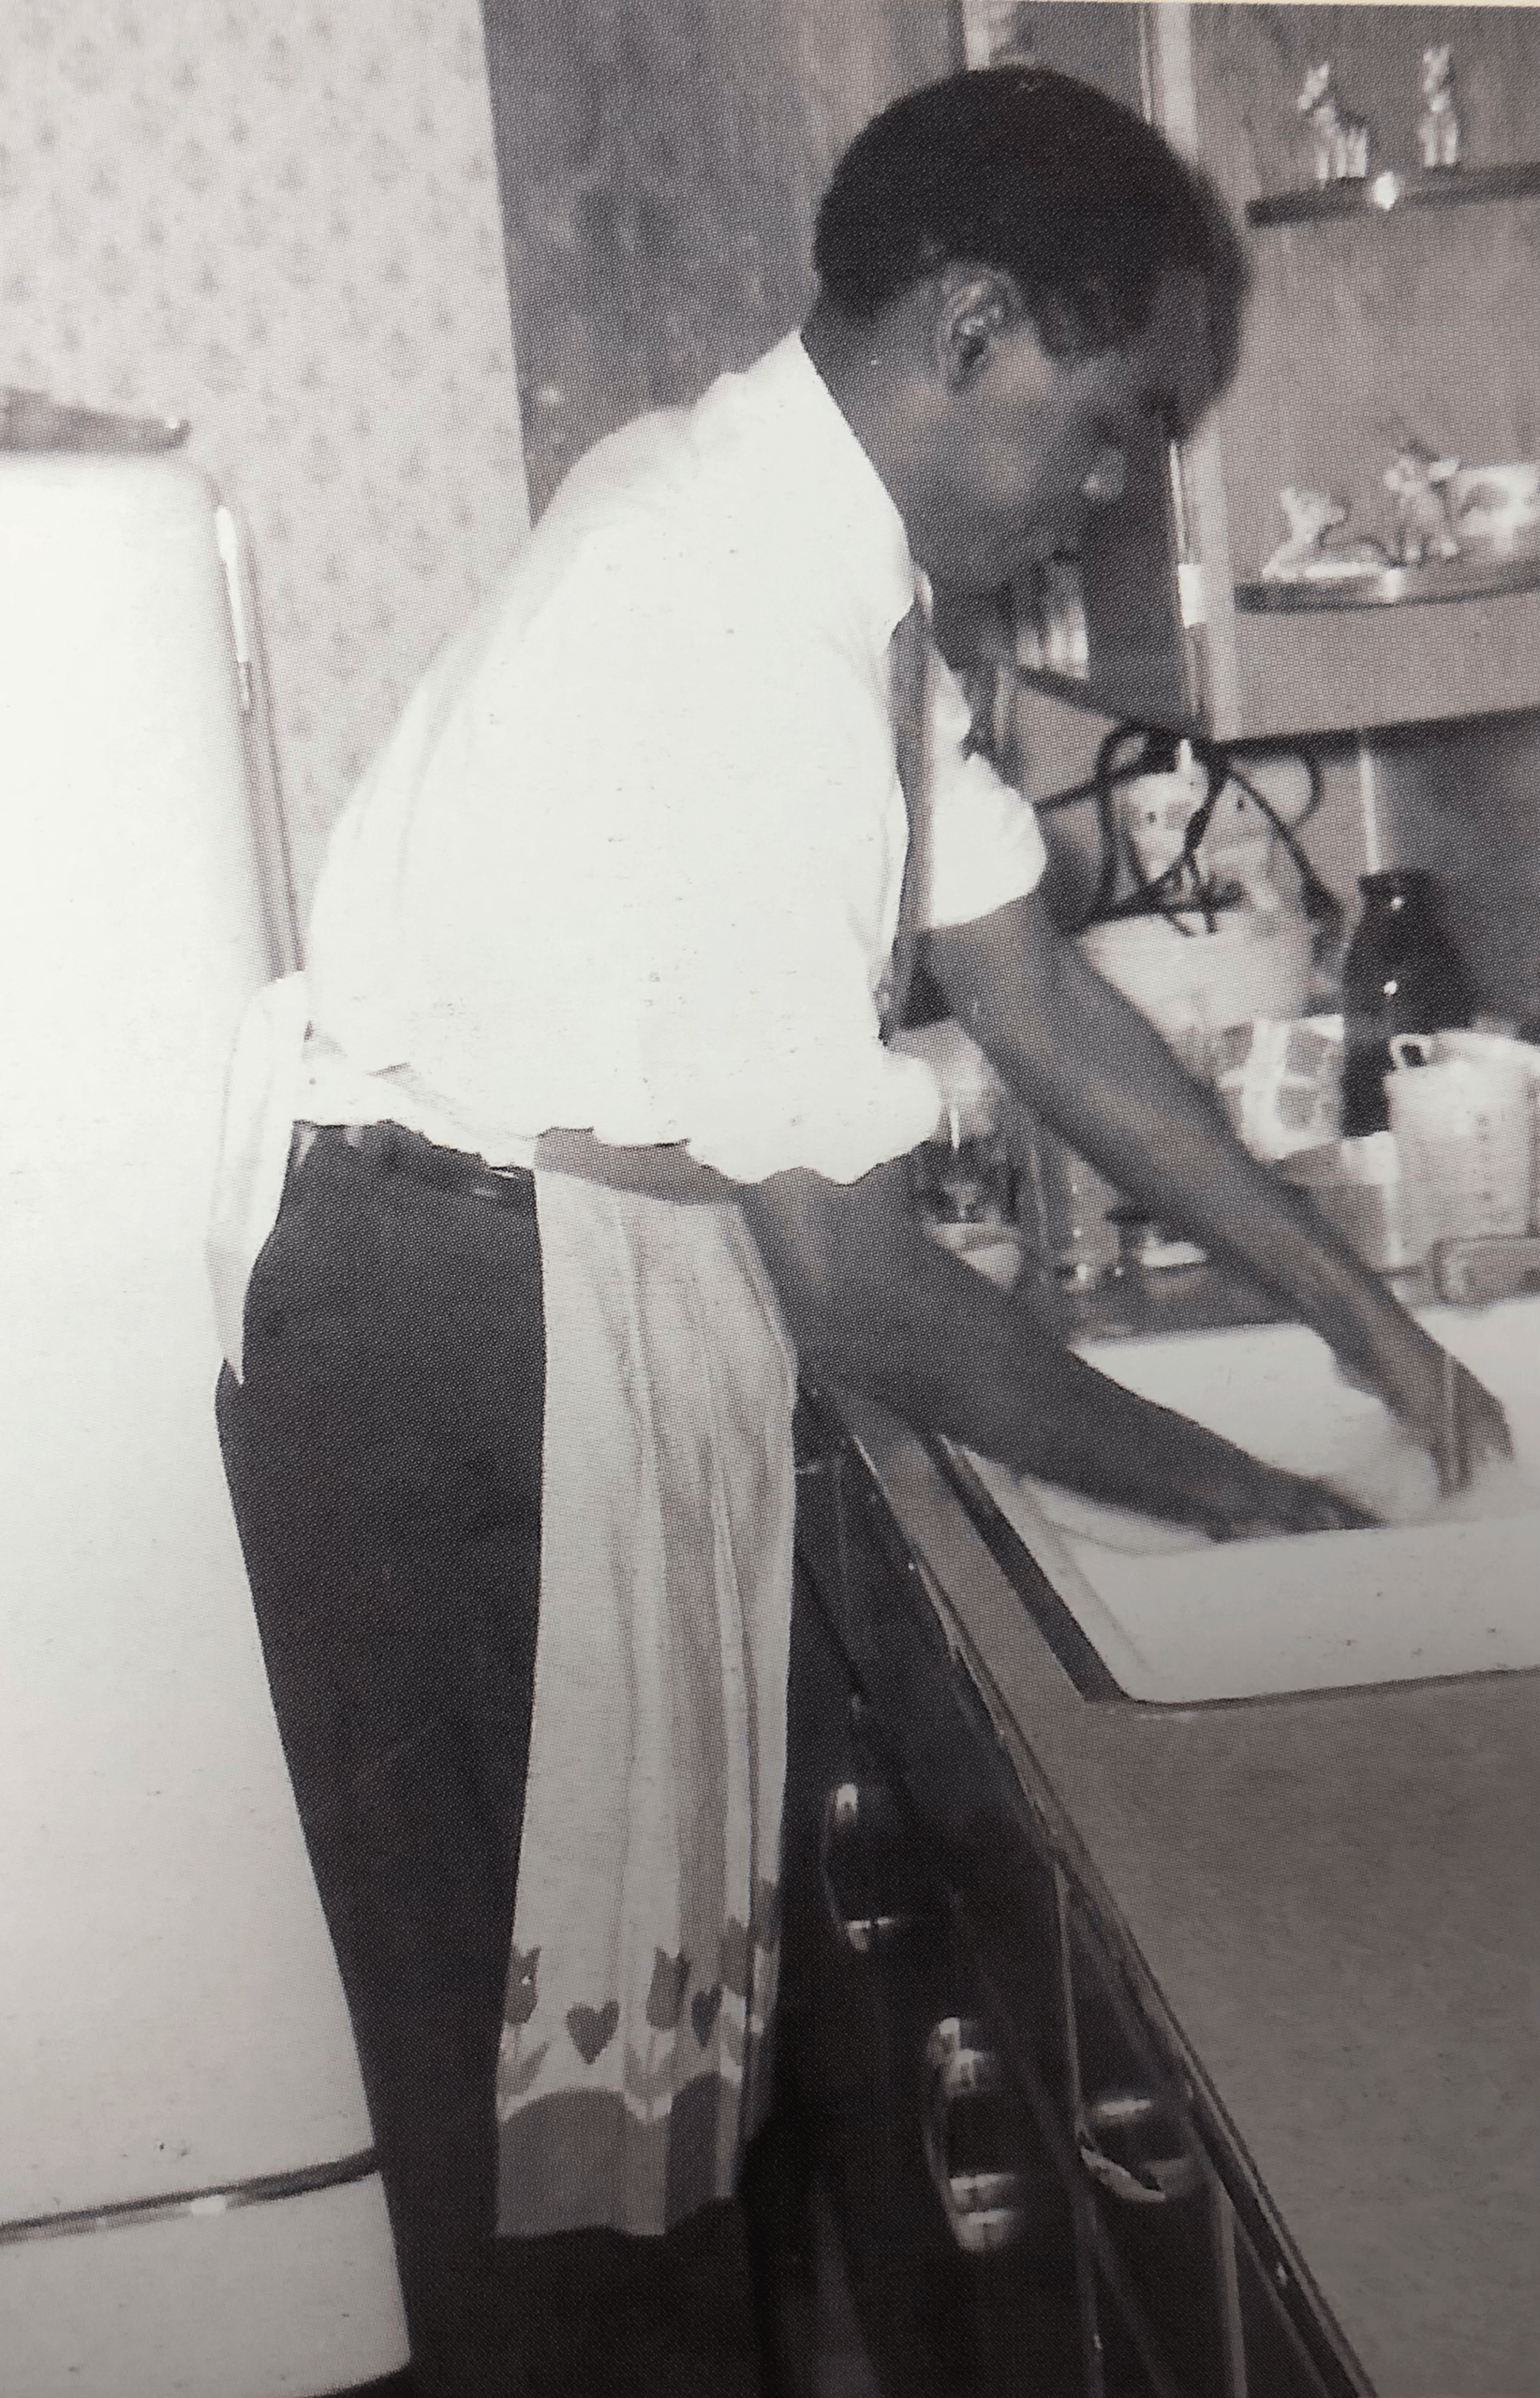 BGSU alumnus James B. Karugu washes dishes in a 1960s kitchen